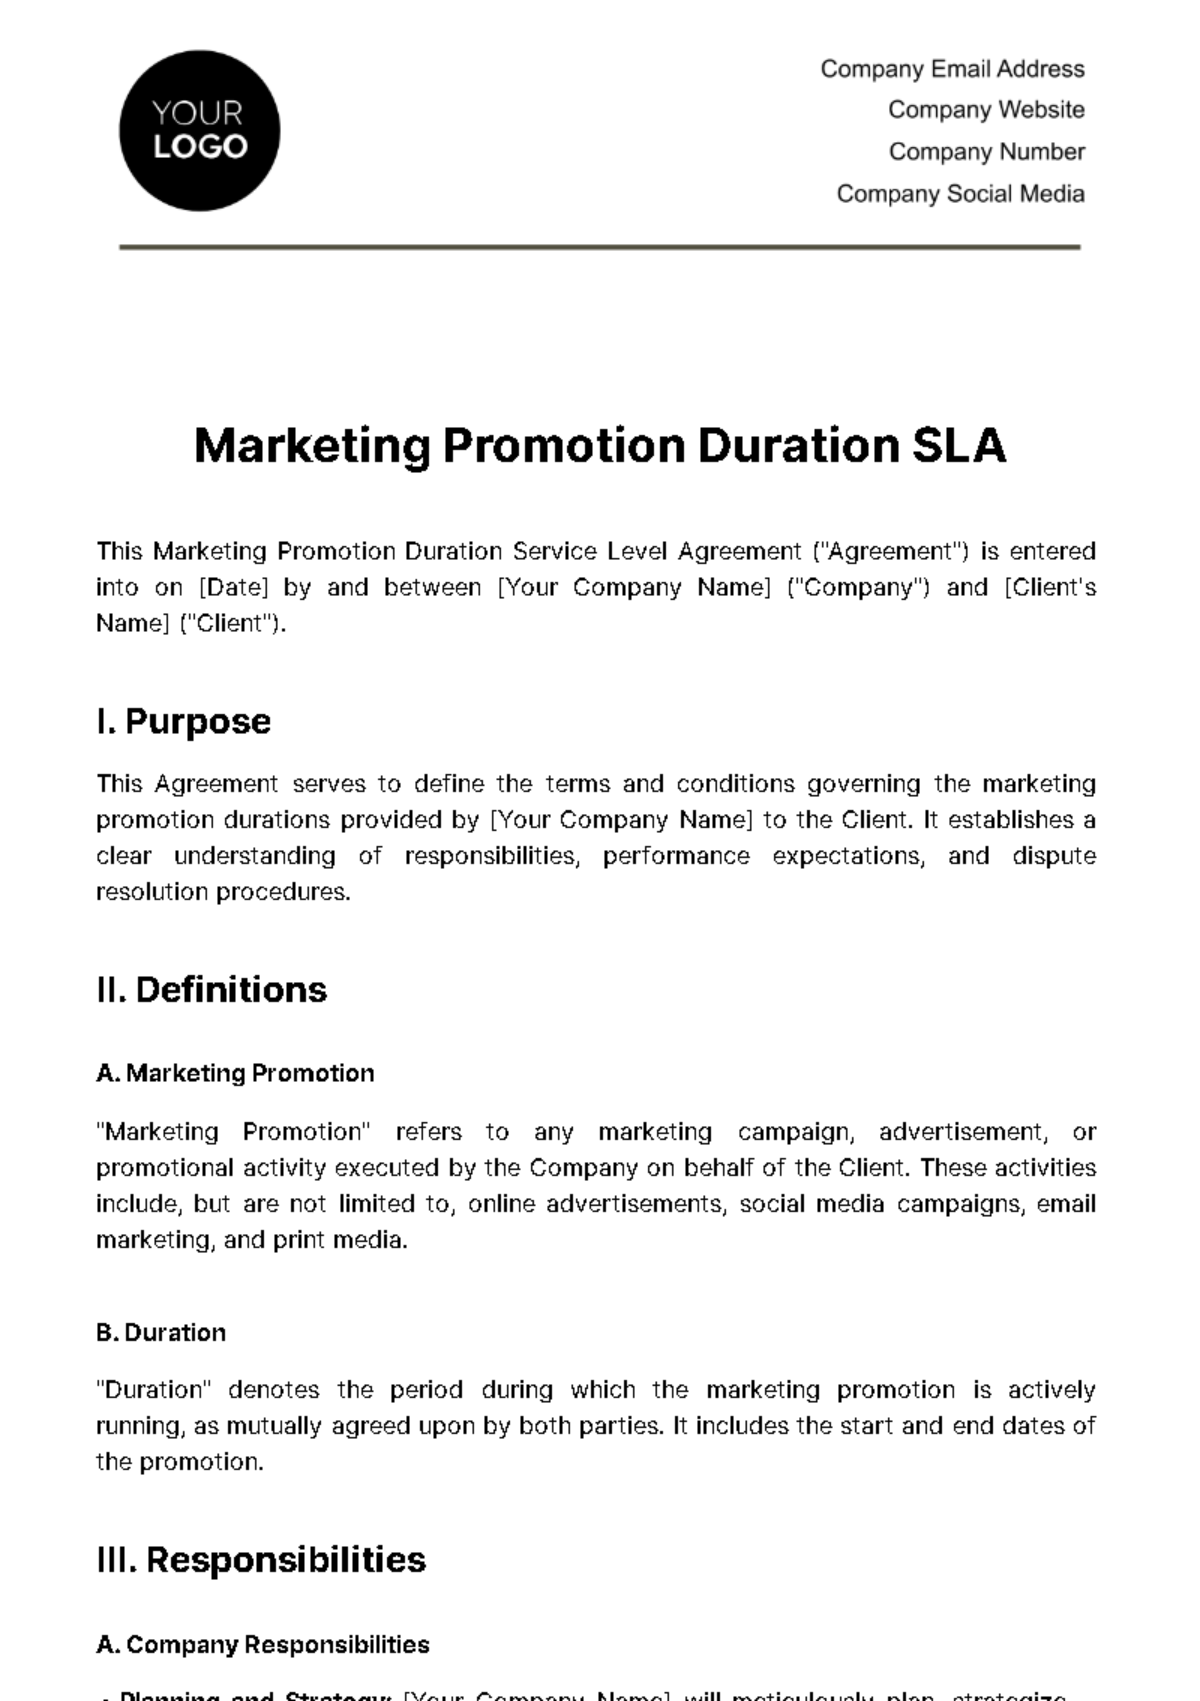 Marketing Promotion Duration SLA Template